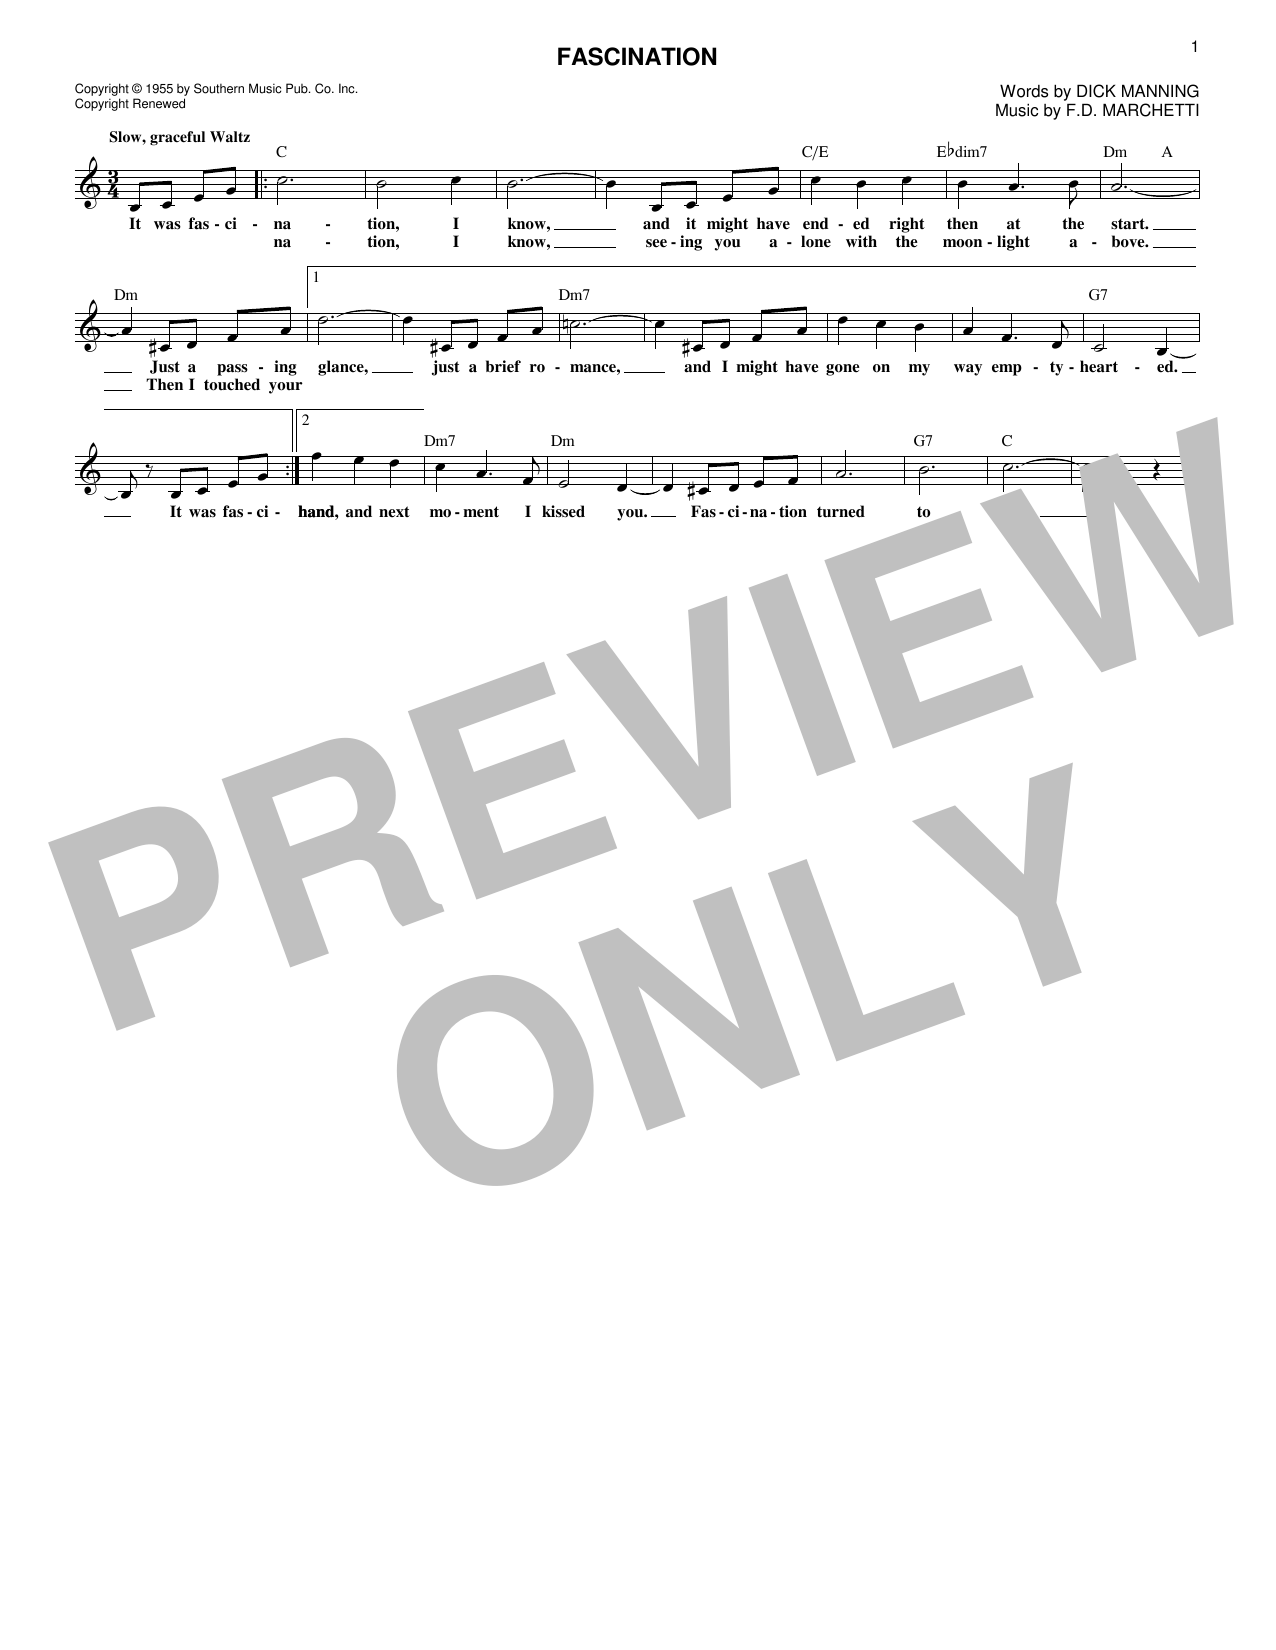 Dinah Shore Fascination Sheet Music Notes & Chords for Lead Sheet / Fake Book - Download or Print PDF